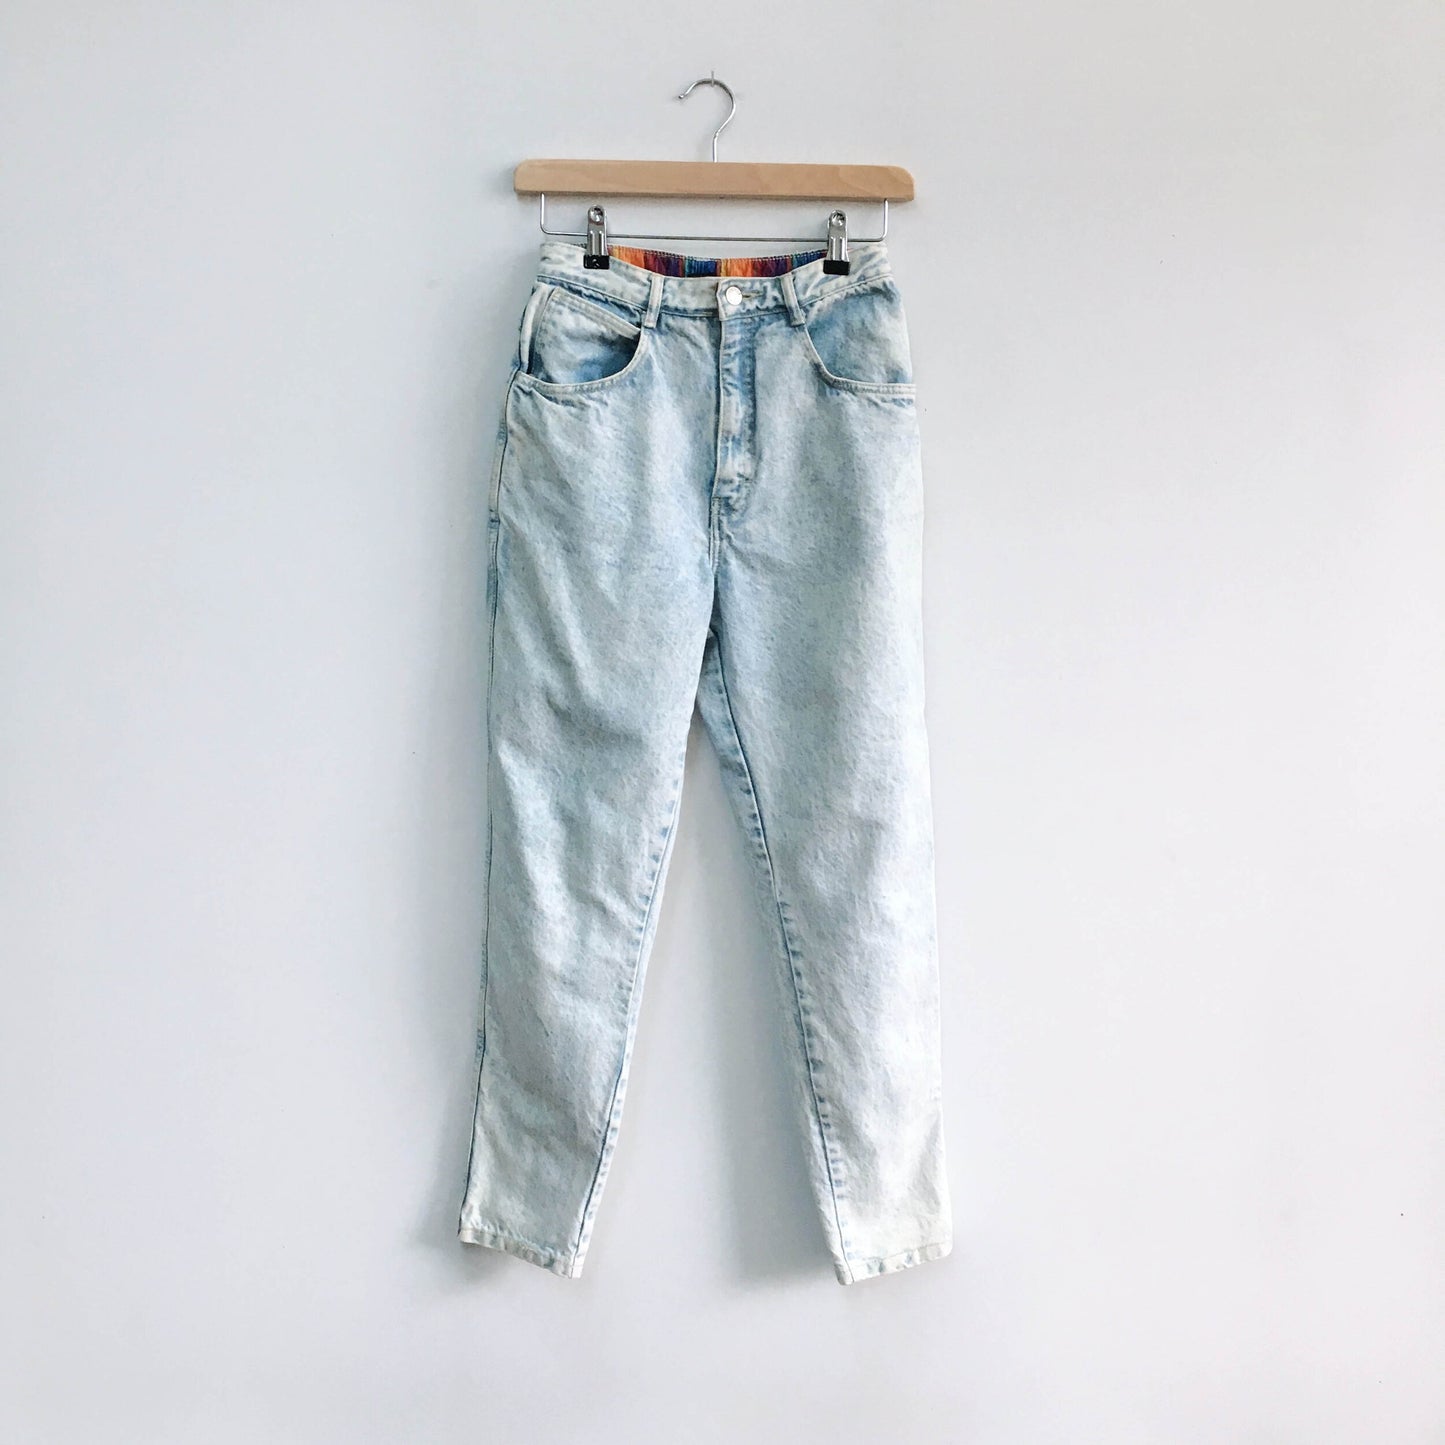 Vintage Gitano Hi-Rise Jeans - size 26